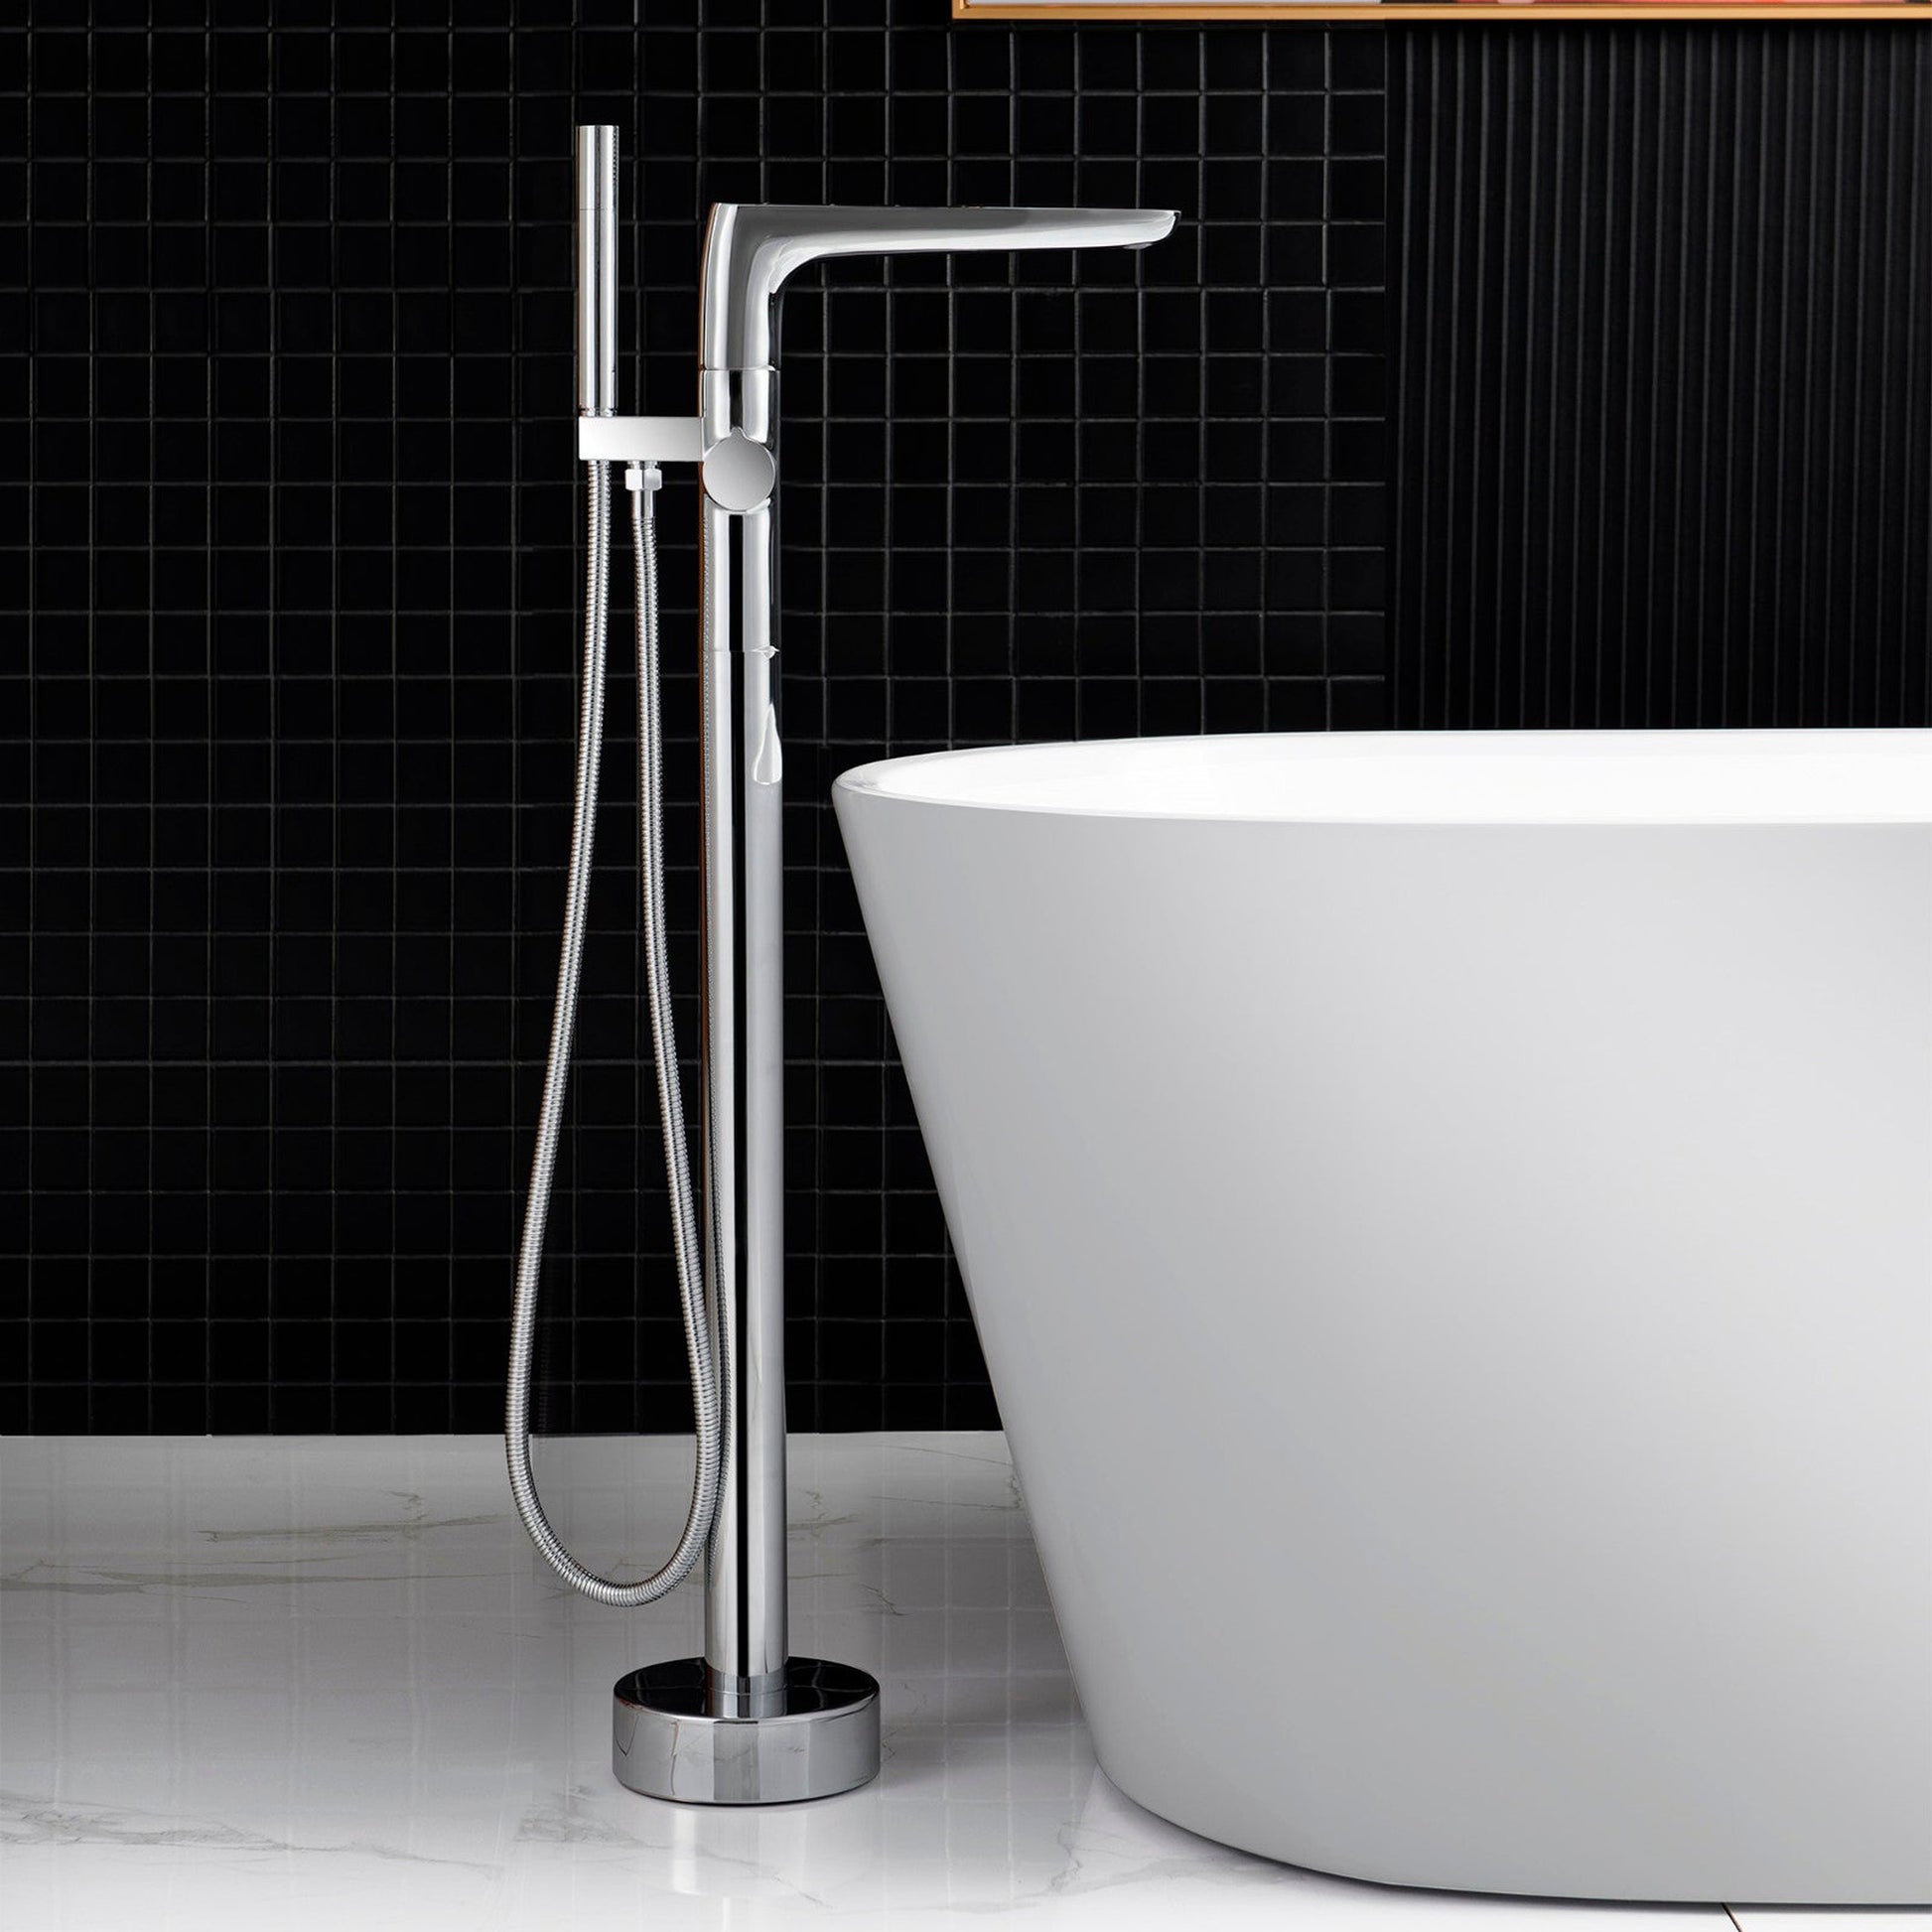 WoodBridge B1702 54" White Acrylic Freestanding Soaking Bathtub With Chrome Drain, Overflow, F-0013 Tub Filler and Caddy Tray